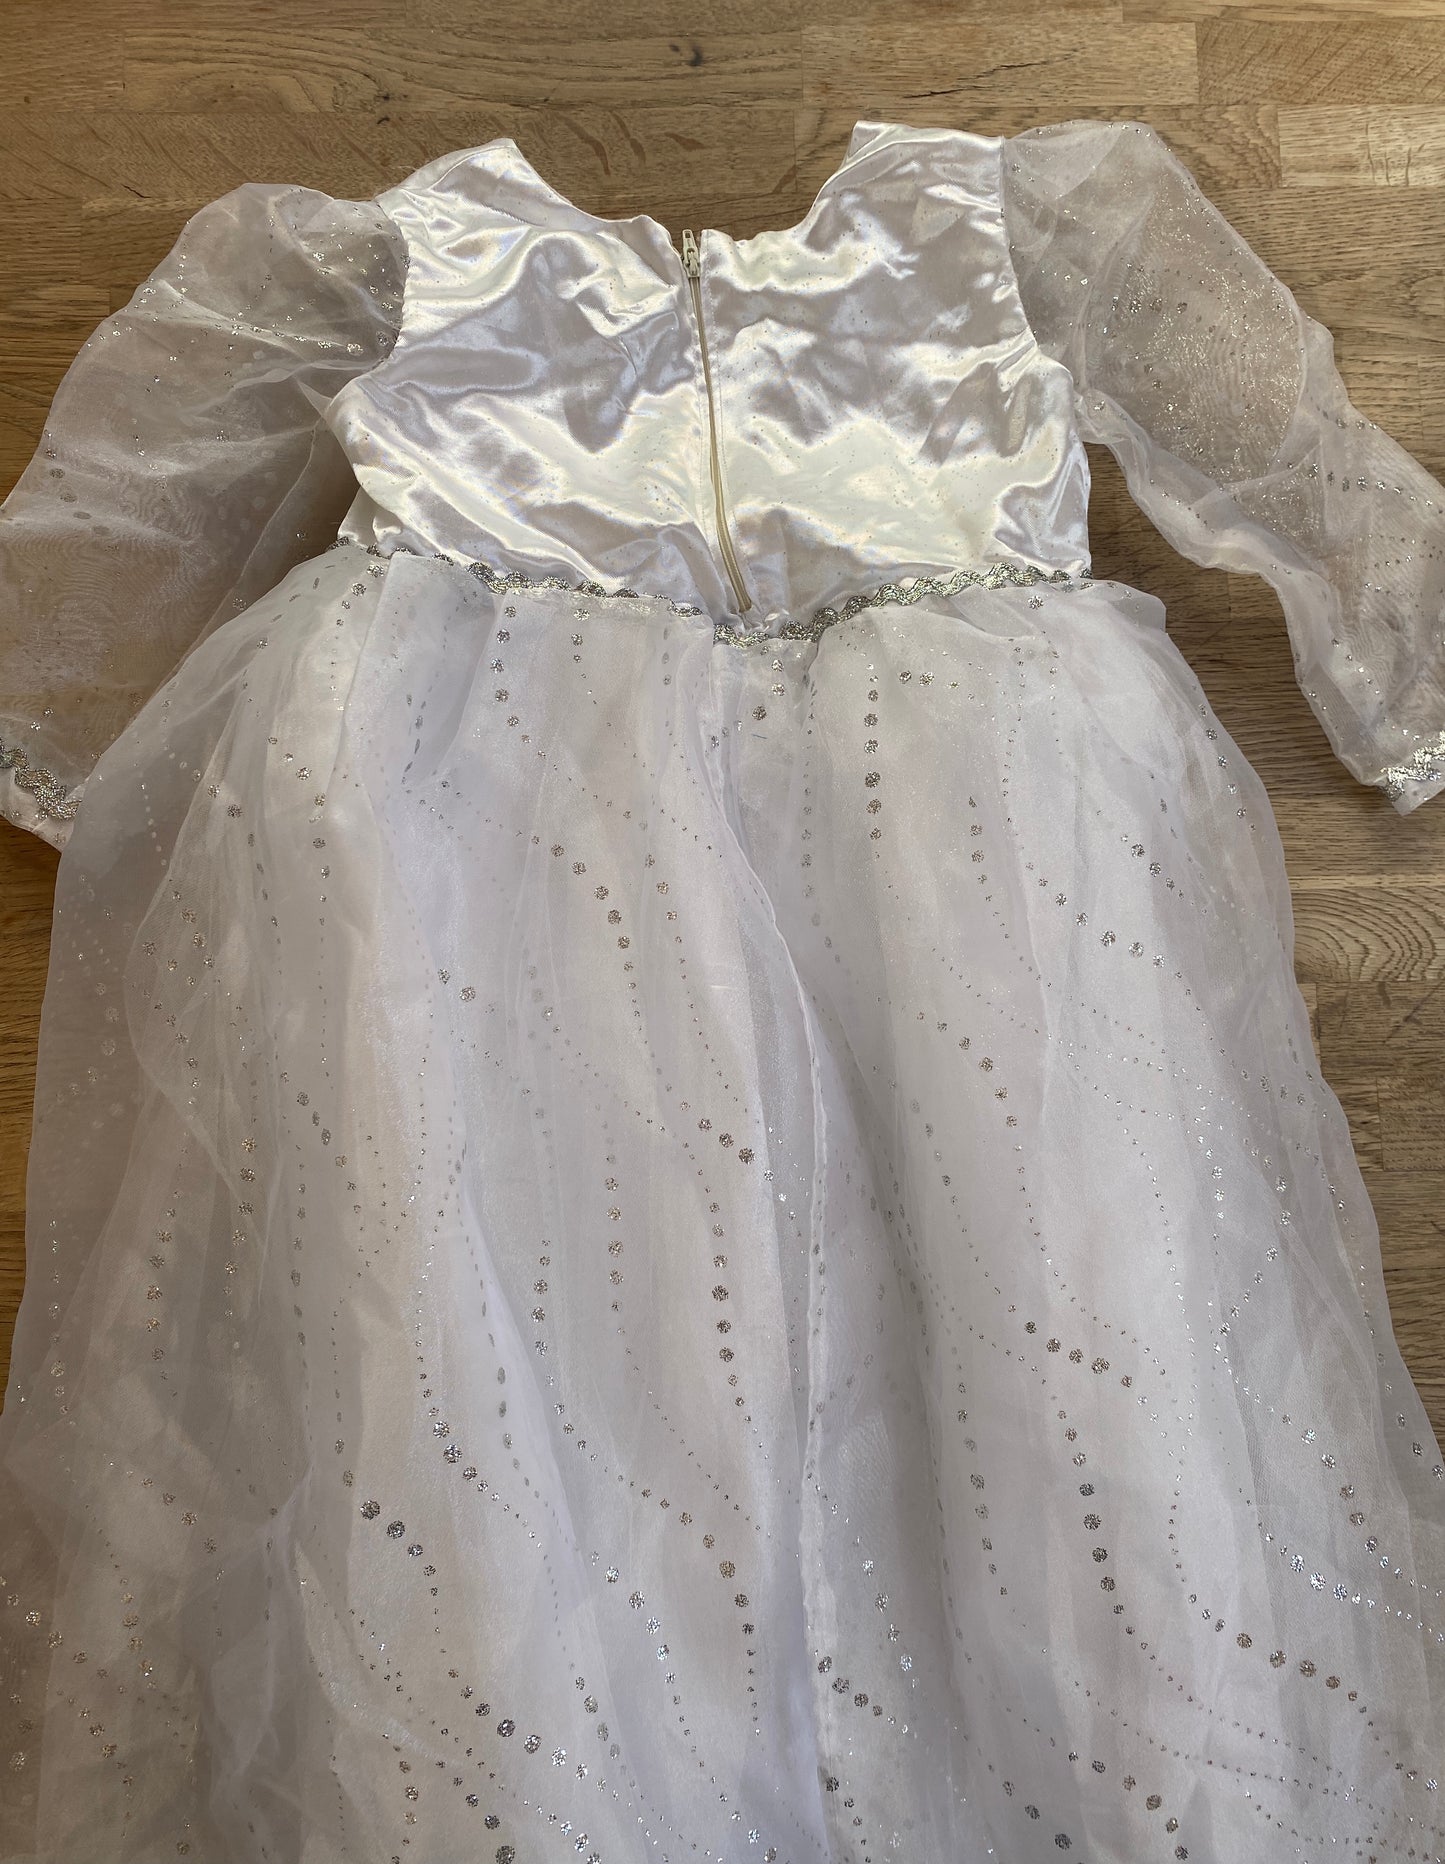 Costume - Fancy Dress-Up White Dress (Pre-Loved) Size 4/5